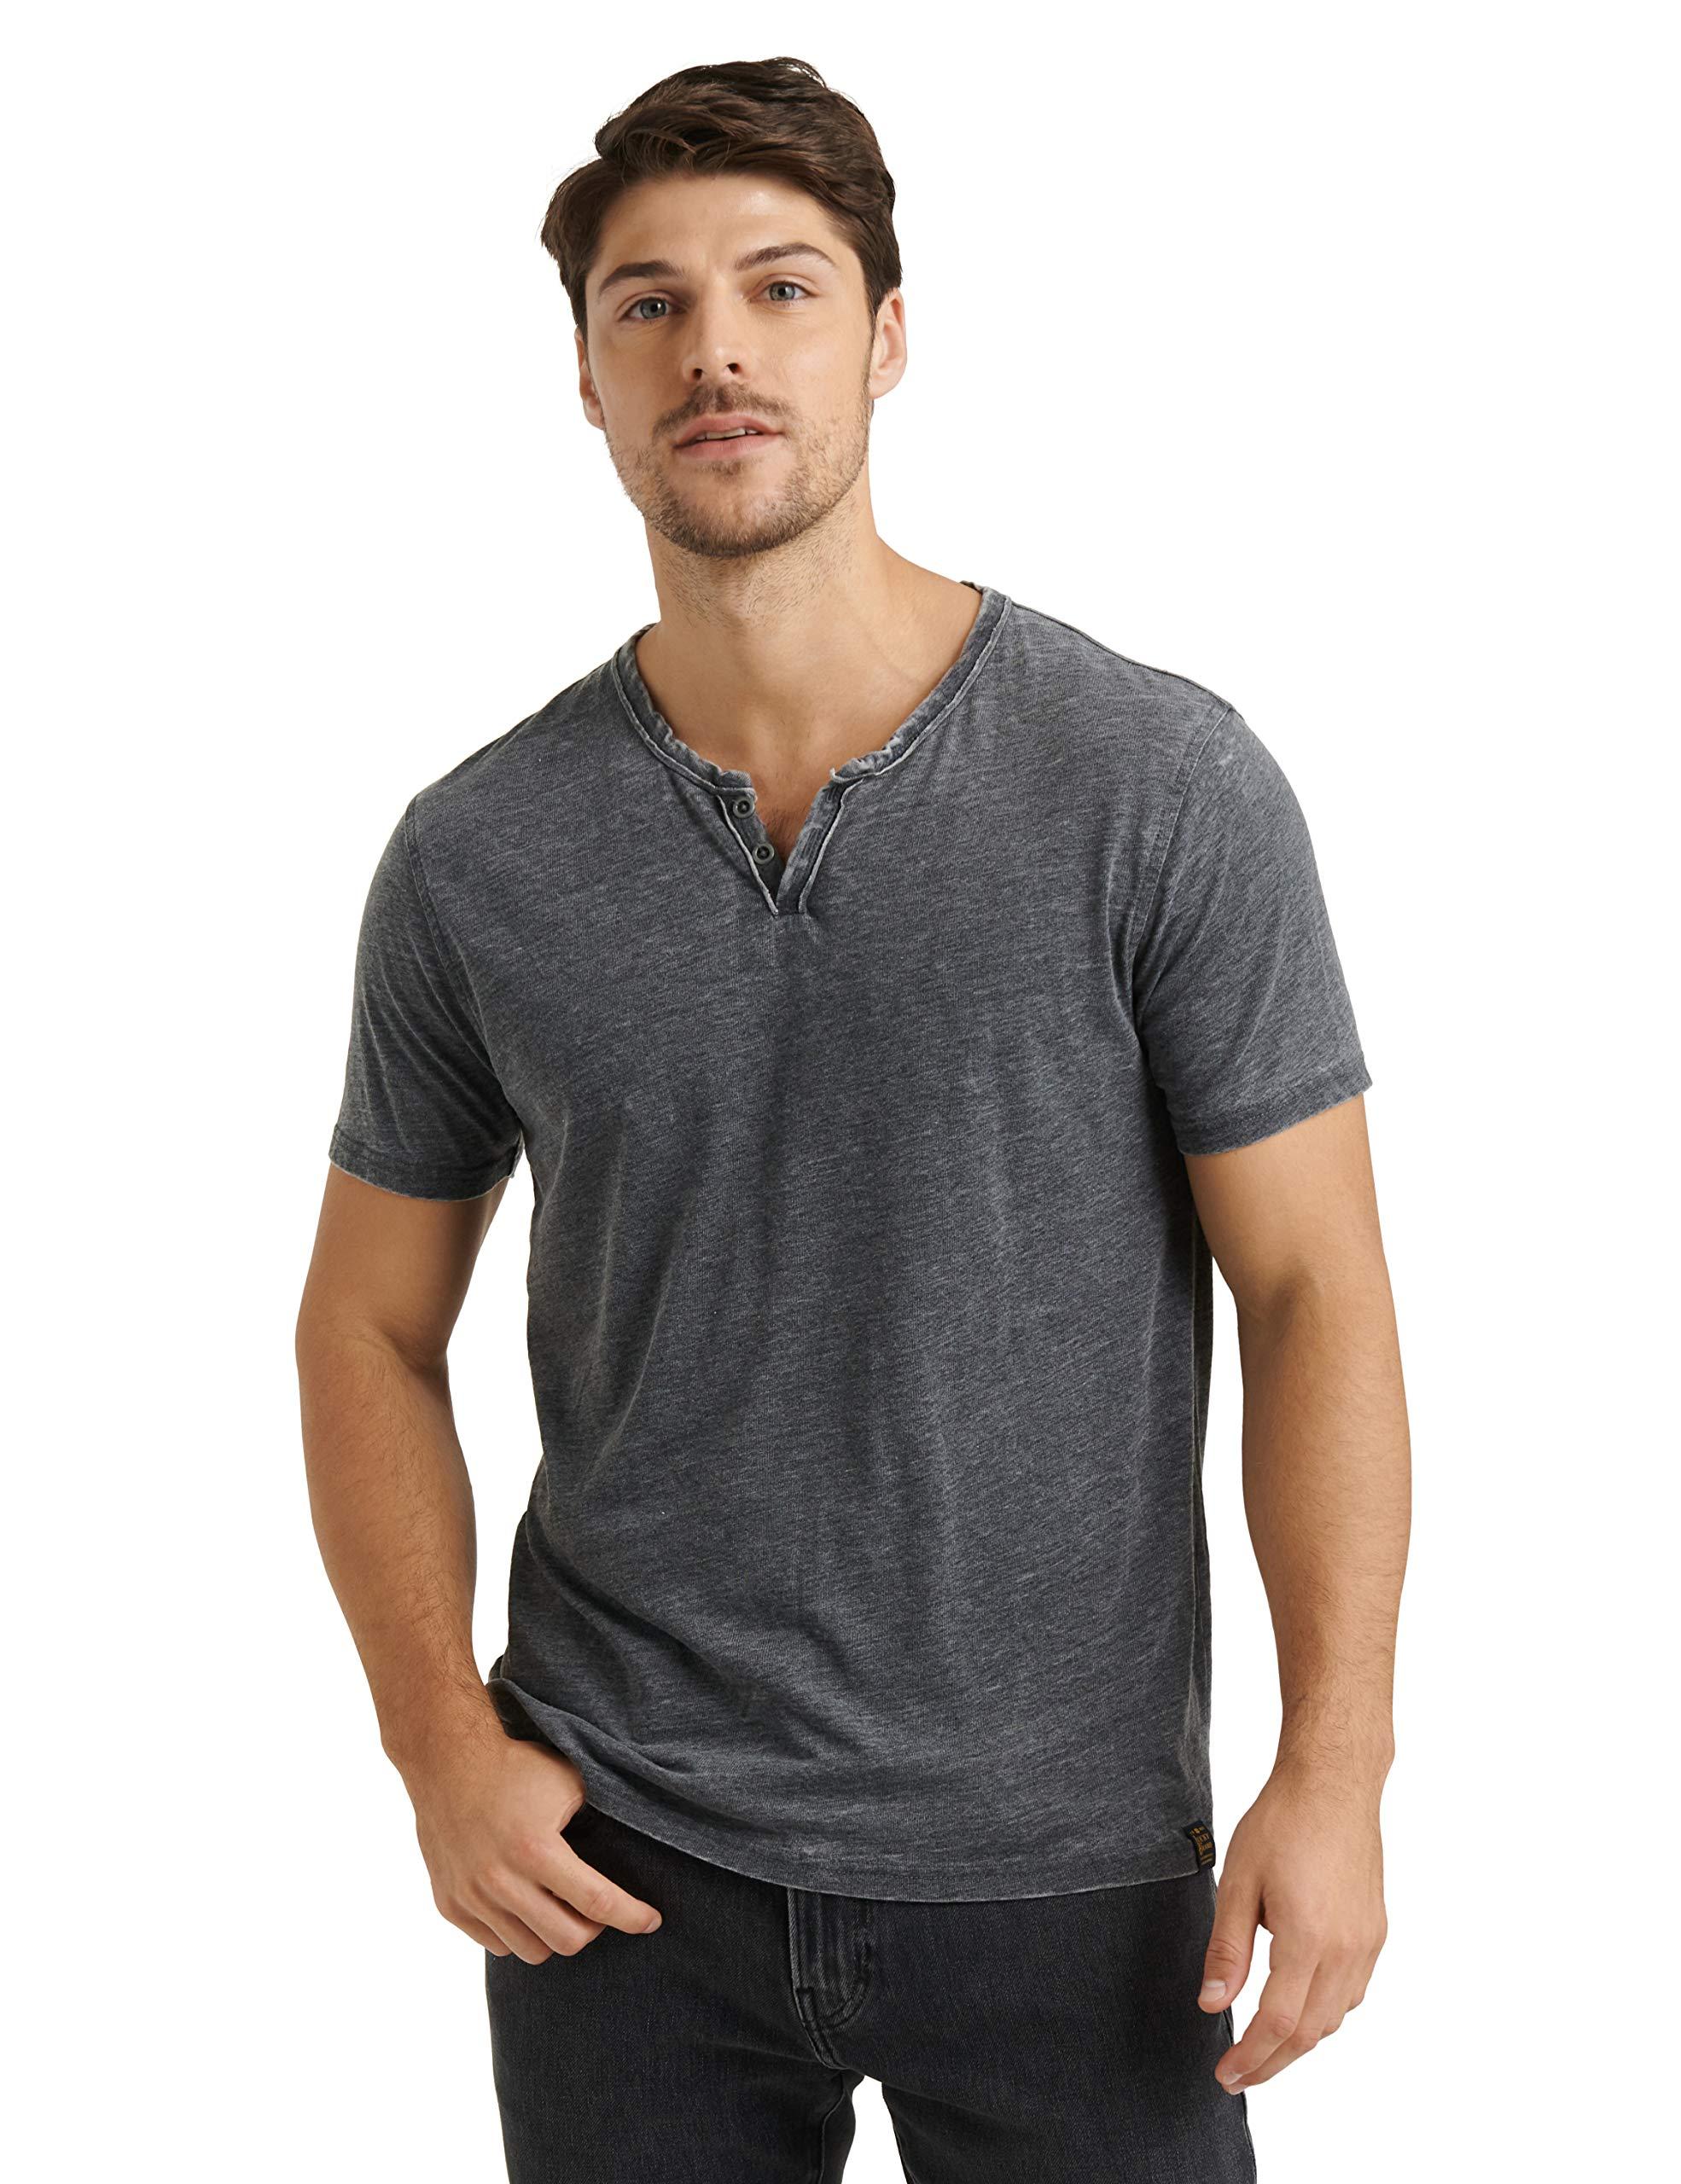 Lucky Brand Venice Burnout Notch Neck Tee Shirt in Black for Men - Lyst